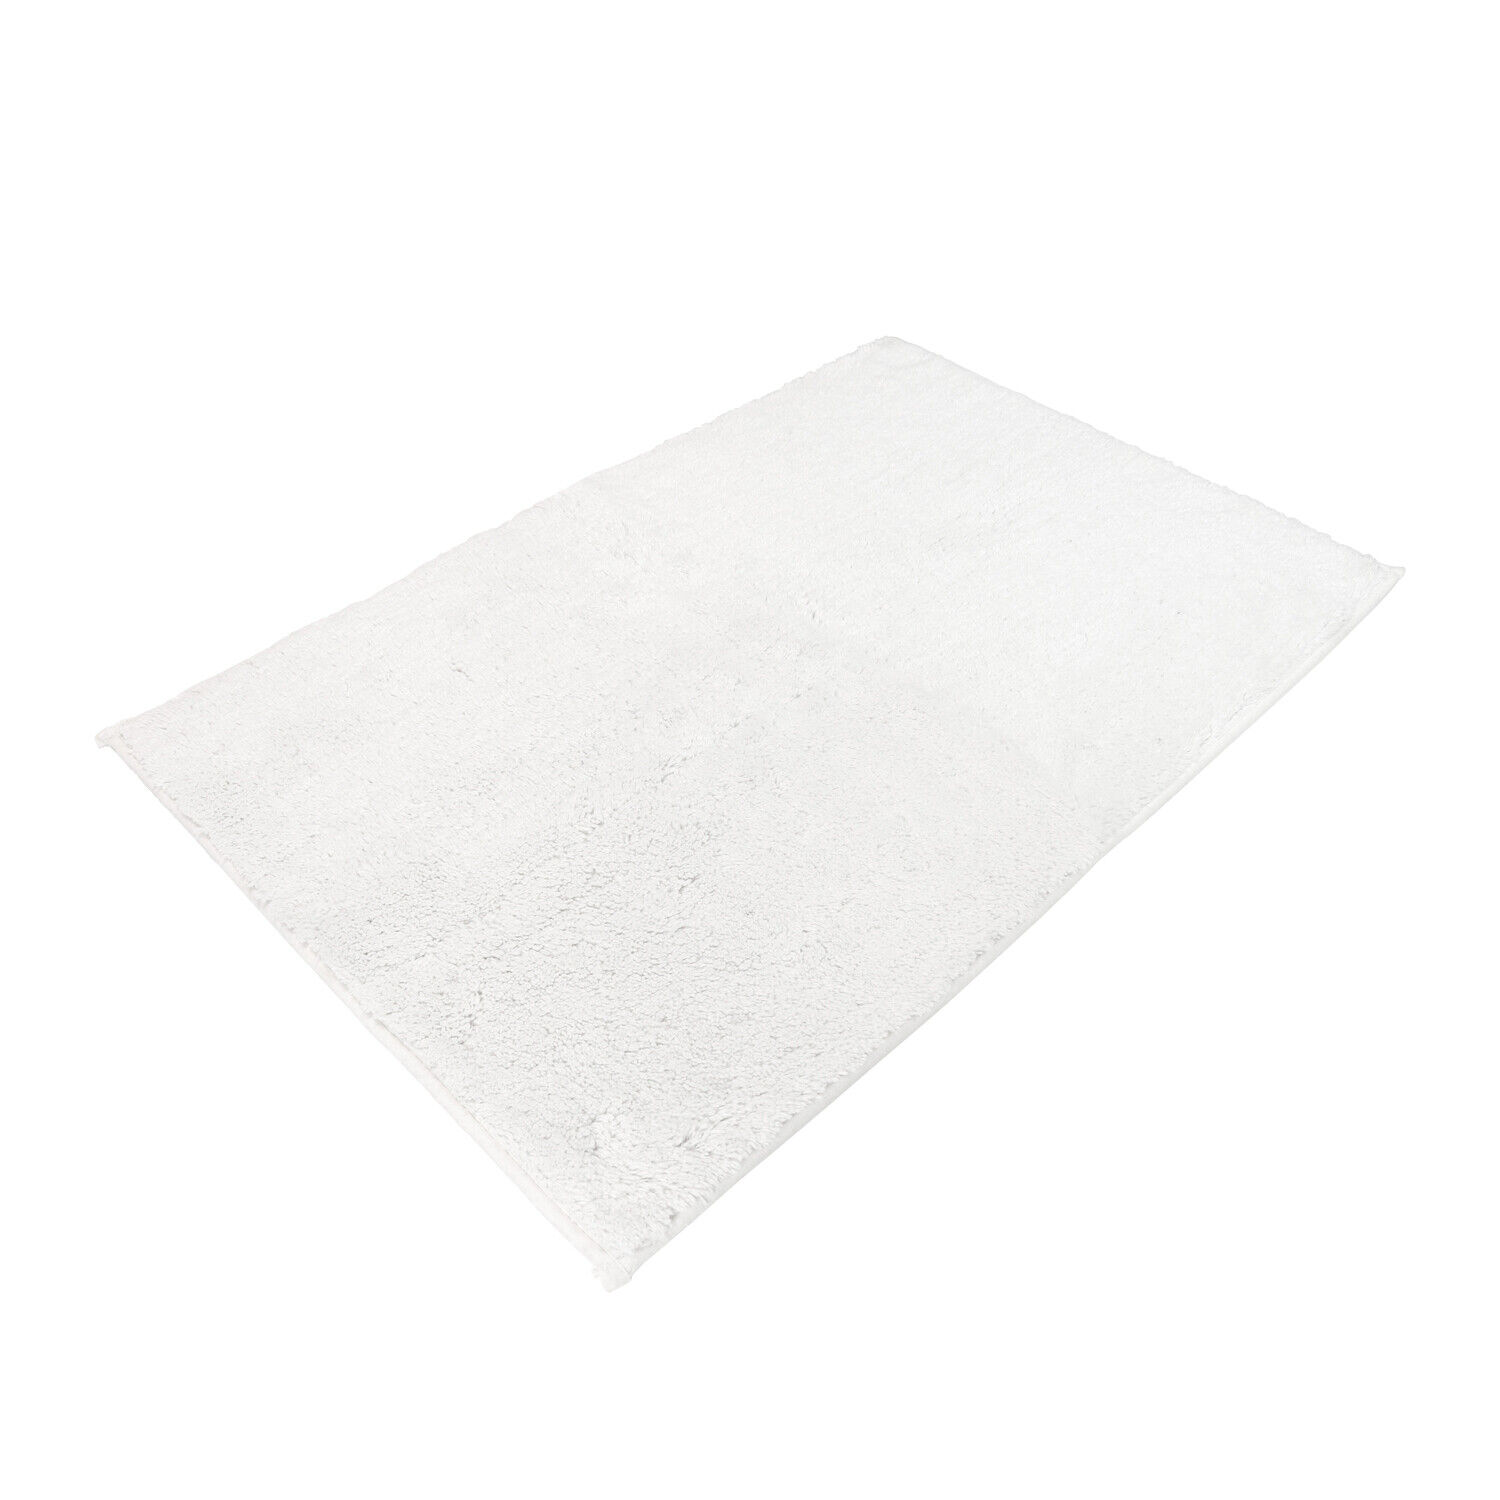 Bulk 6-Pack of Bath Mat Rugs - 20 x 30 White Cotton Bathroom Floor Non-Slip Arkwright Does Not Apply - фотография #2